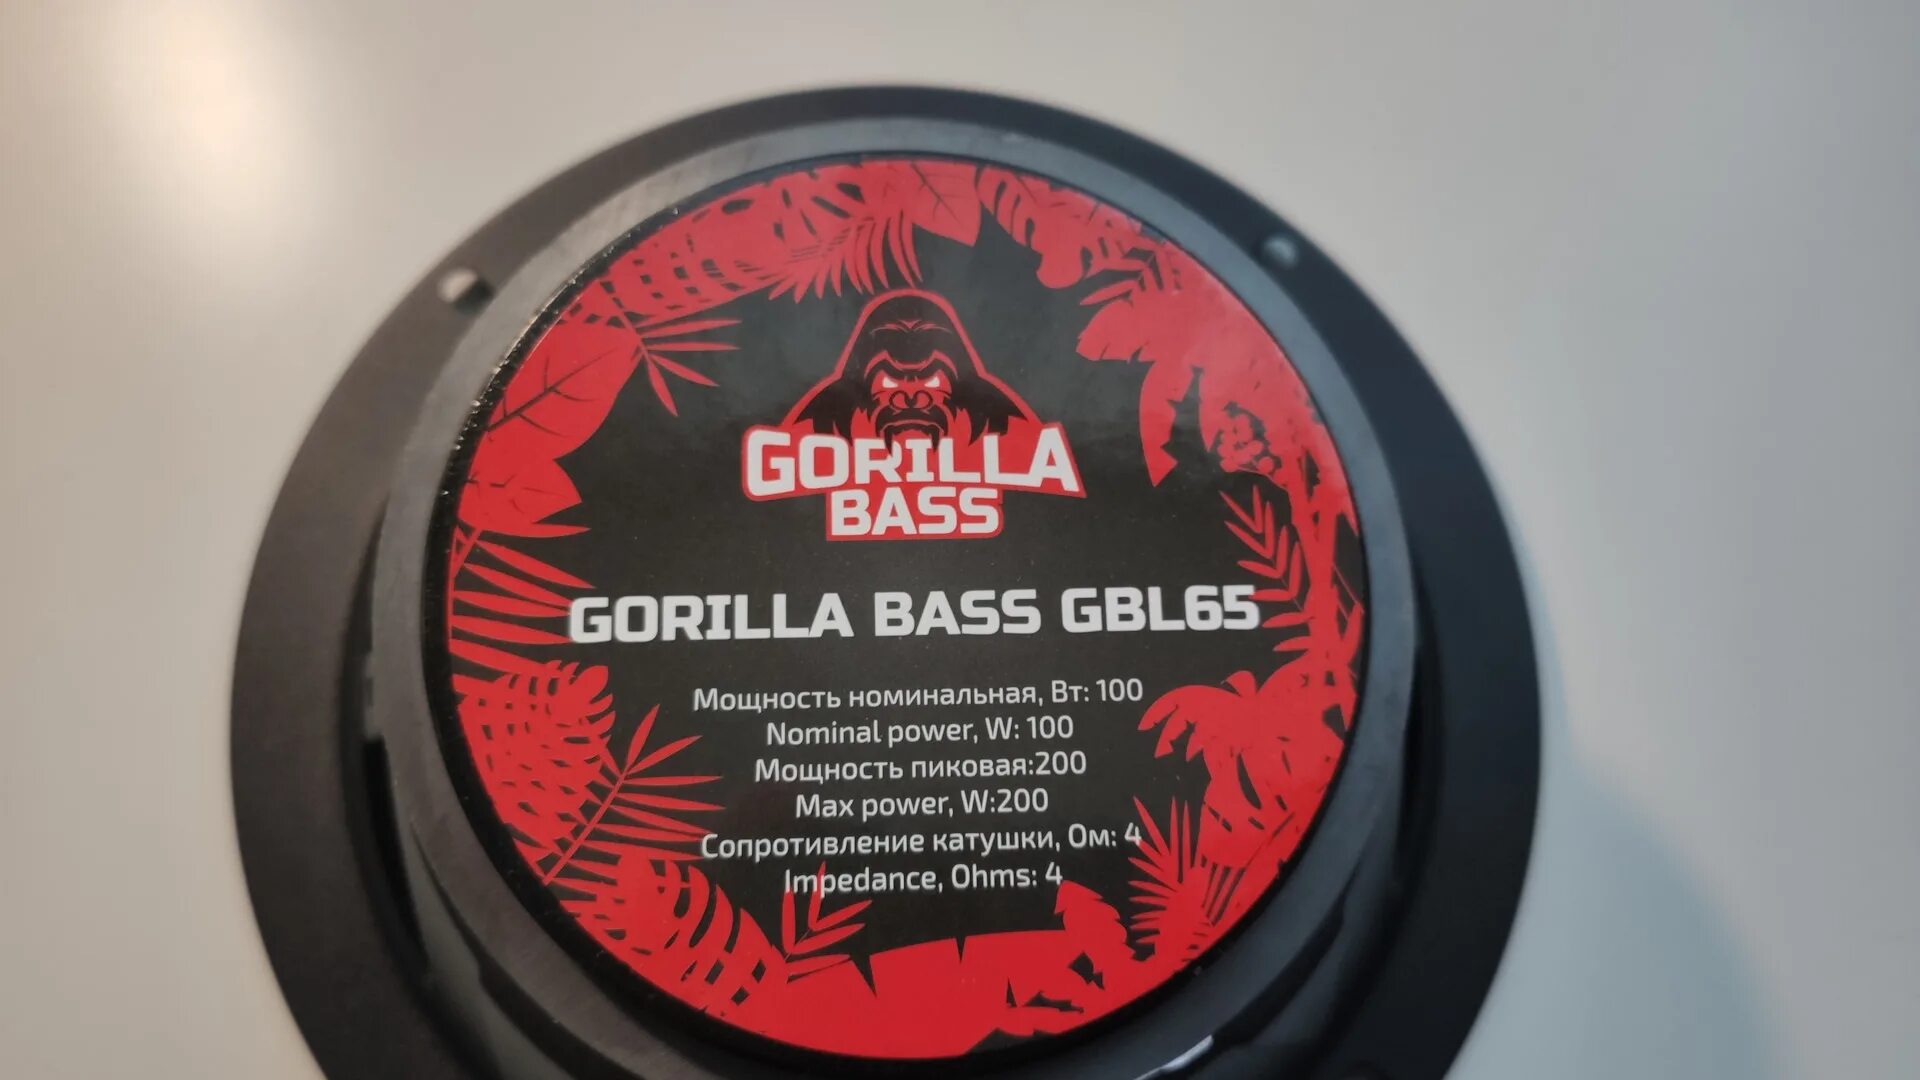 16 басс. Kicx Gorilla Bass gbl65. Динамики ГБЛ Нарилла басс. Горилла басс GBL 65 Размеры. Горилла басс GBL 65 Размеры магнита.